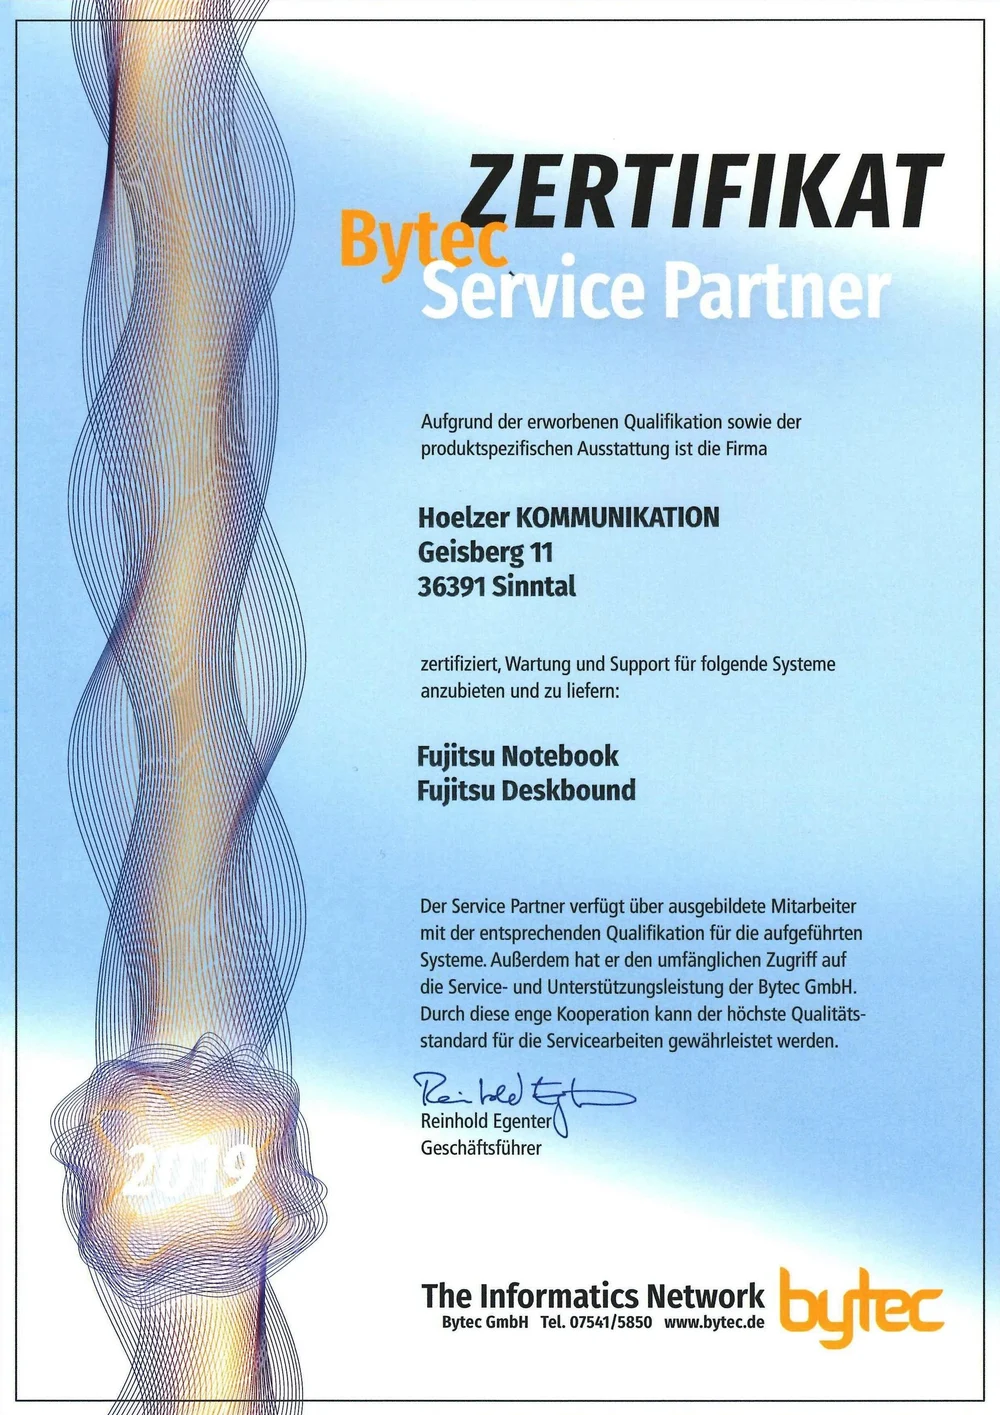 bytec Service Partner Zertifikat, 2019